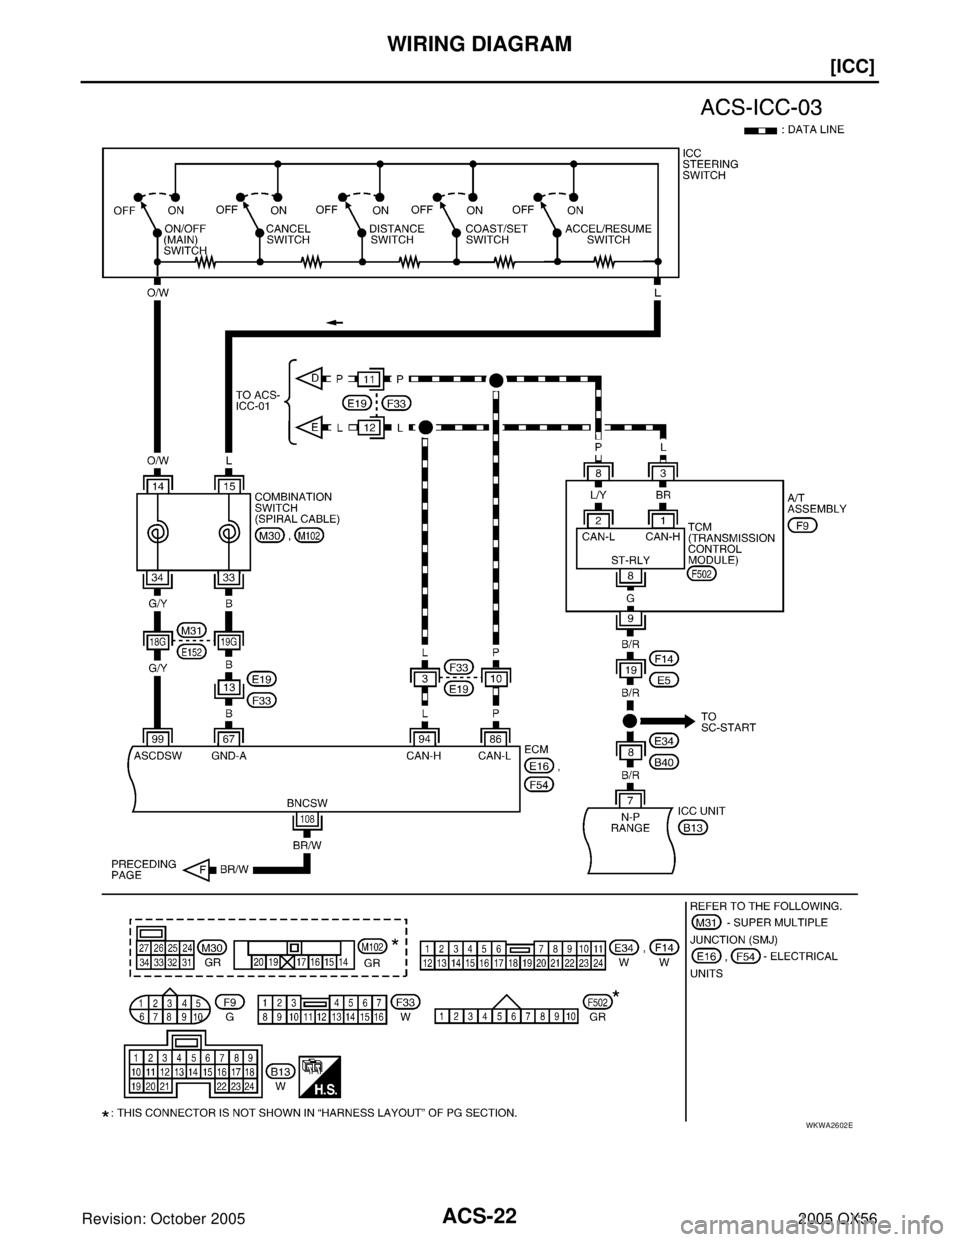 INFINITI QX4 2005  Factory Service Manual ACS-22
[ICC]
WIRING DIAGRAM
Revision: October 20052005 QX56
WKWA2602E 